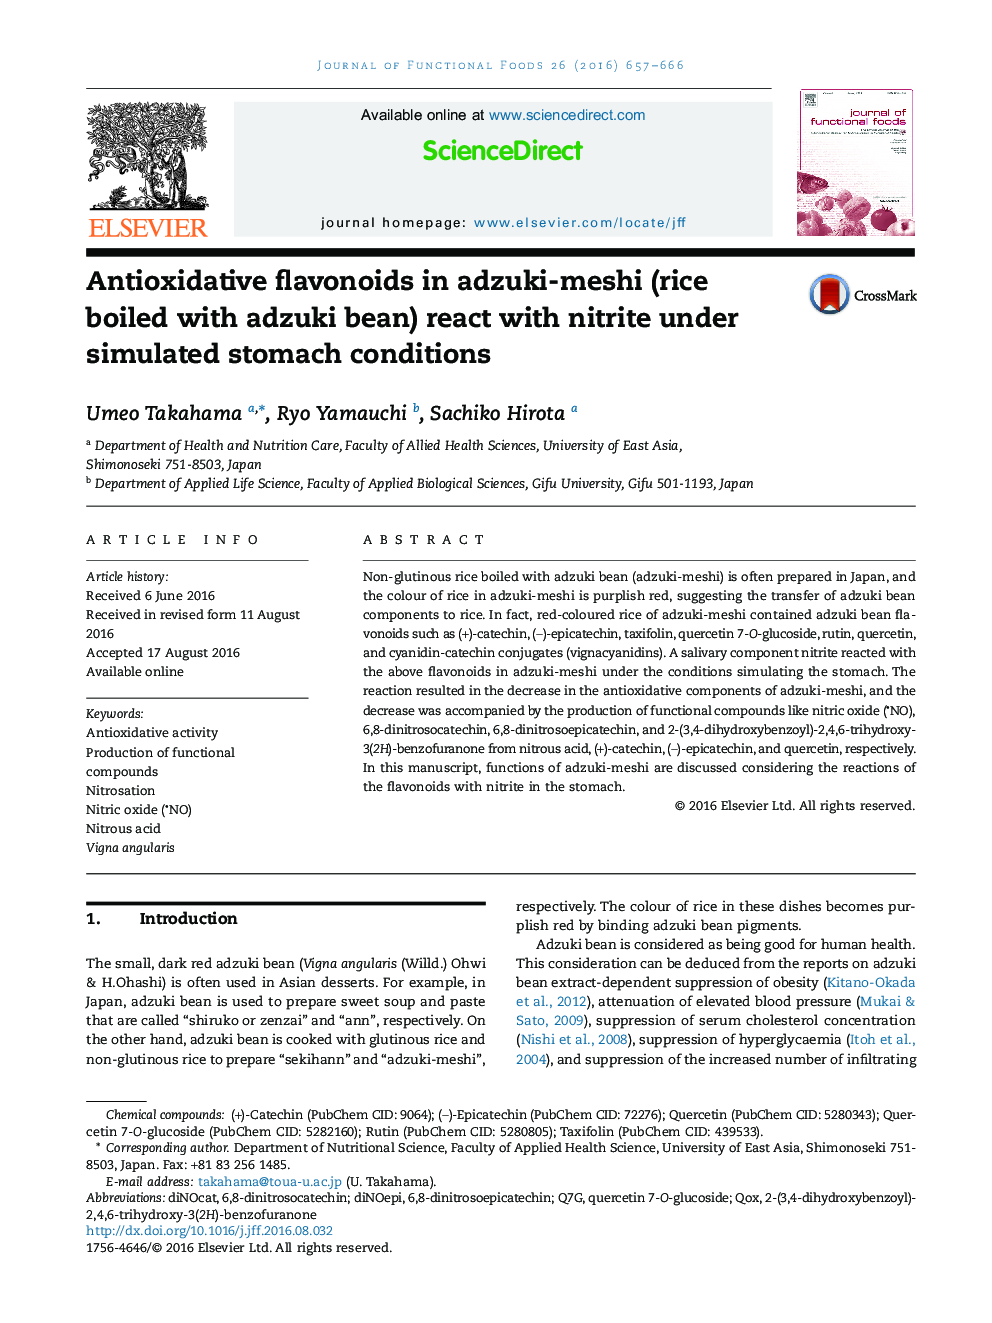 Antioxidative flavonoids in adzuki-meshi (rice boiled with adzuki bean) react with nitrite under simulated stomach conditions